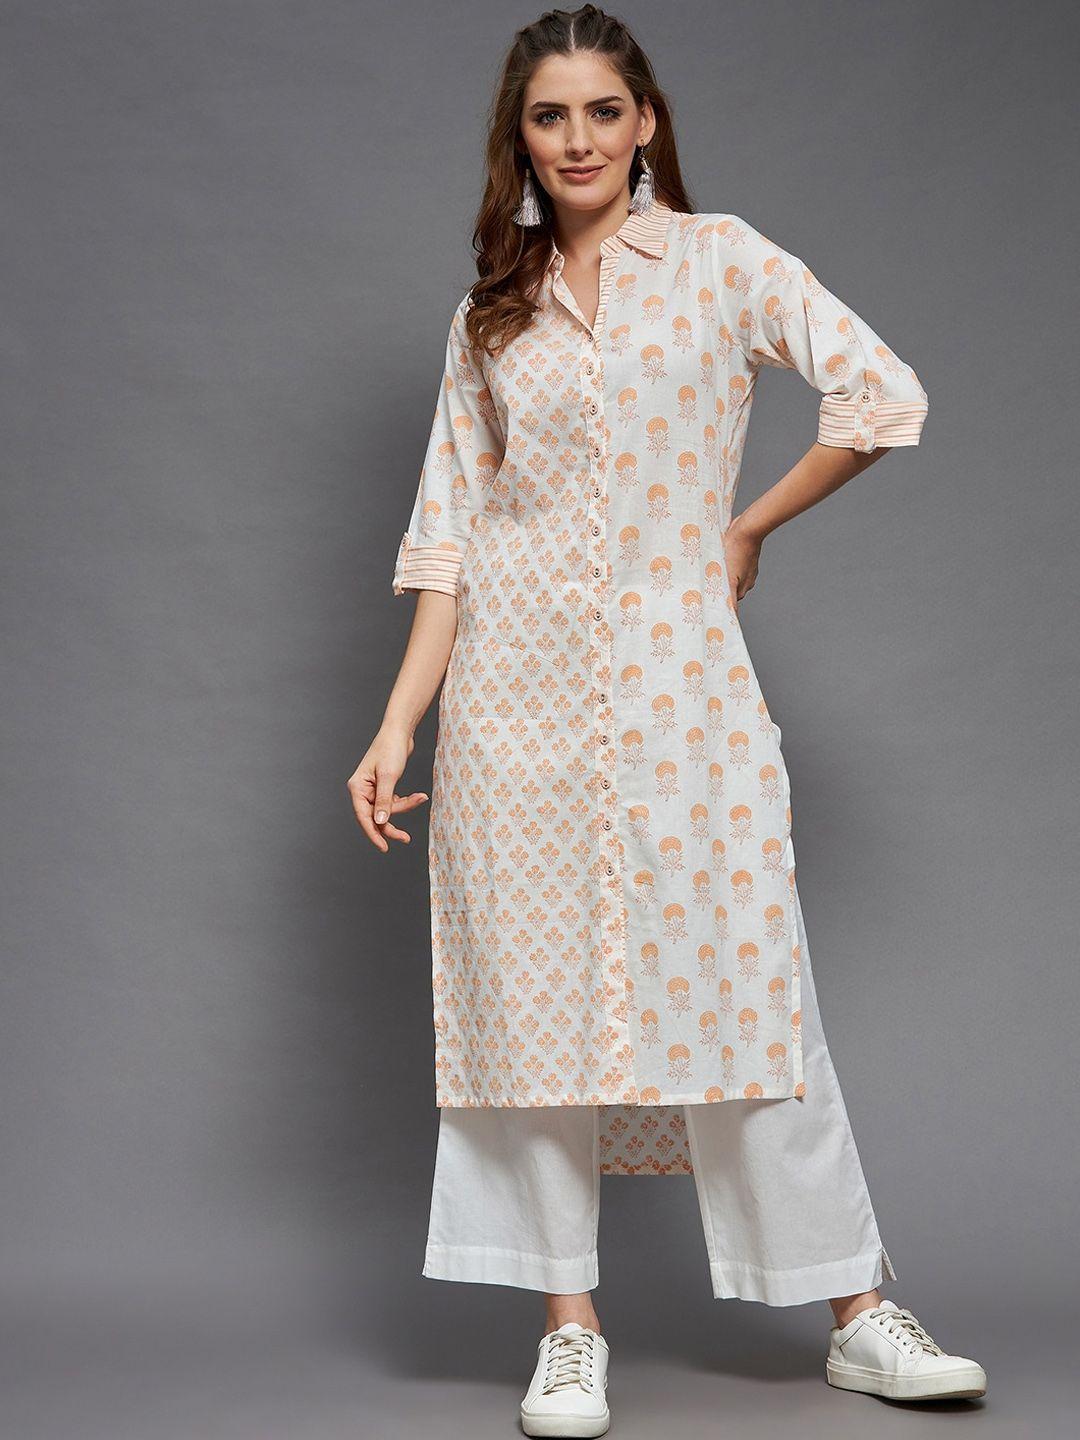 indian dobby women white & peach-coloured floral printed flared sleeves block print pakistani style kurta